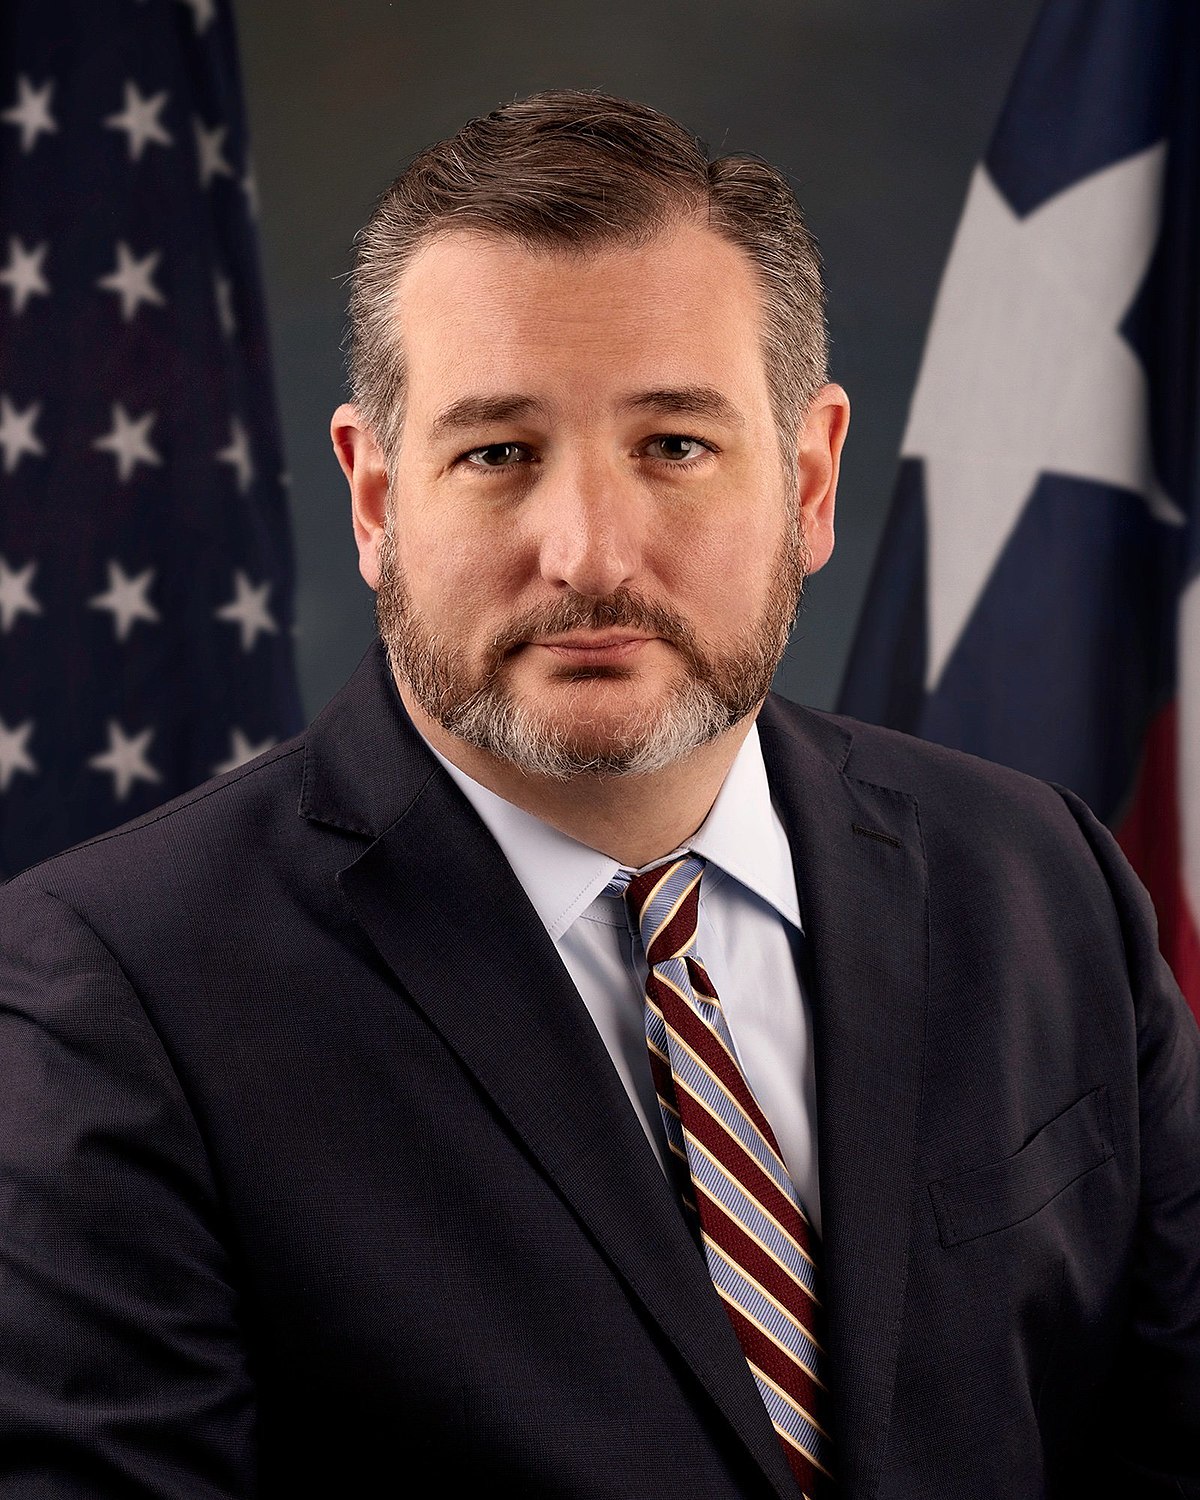 Ted_Cruz_senatorial_portraitjpg